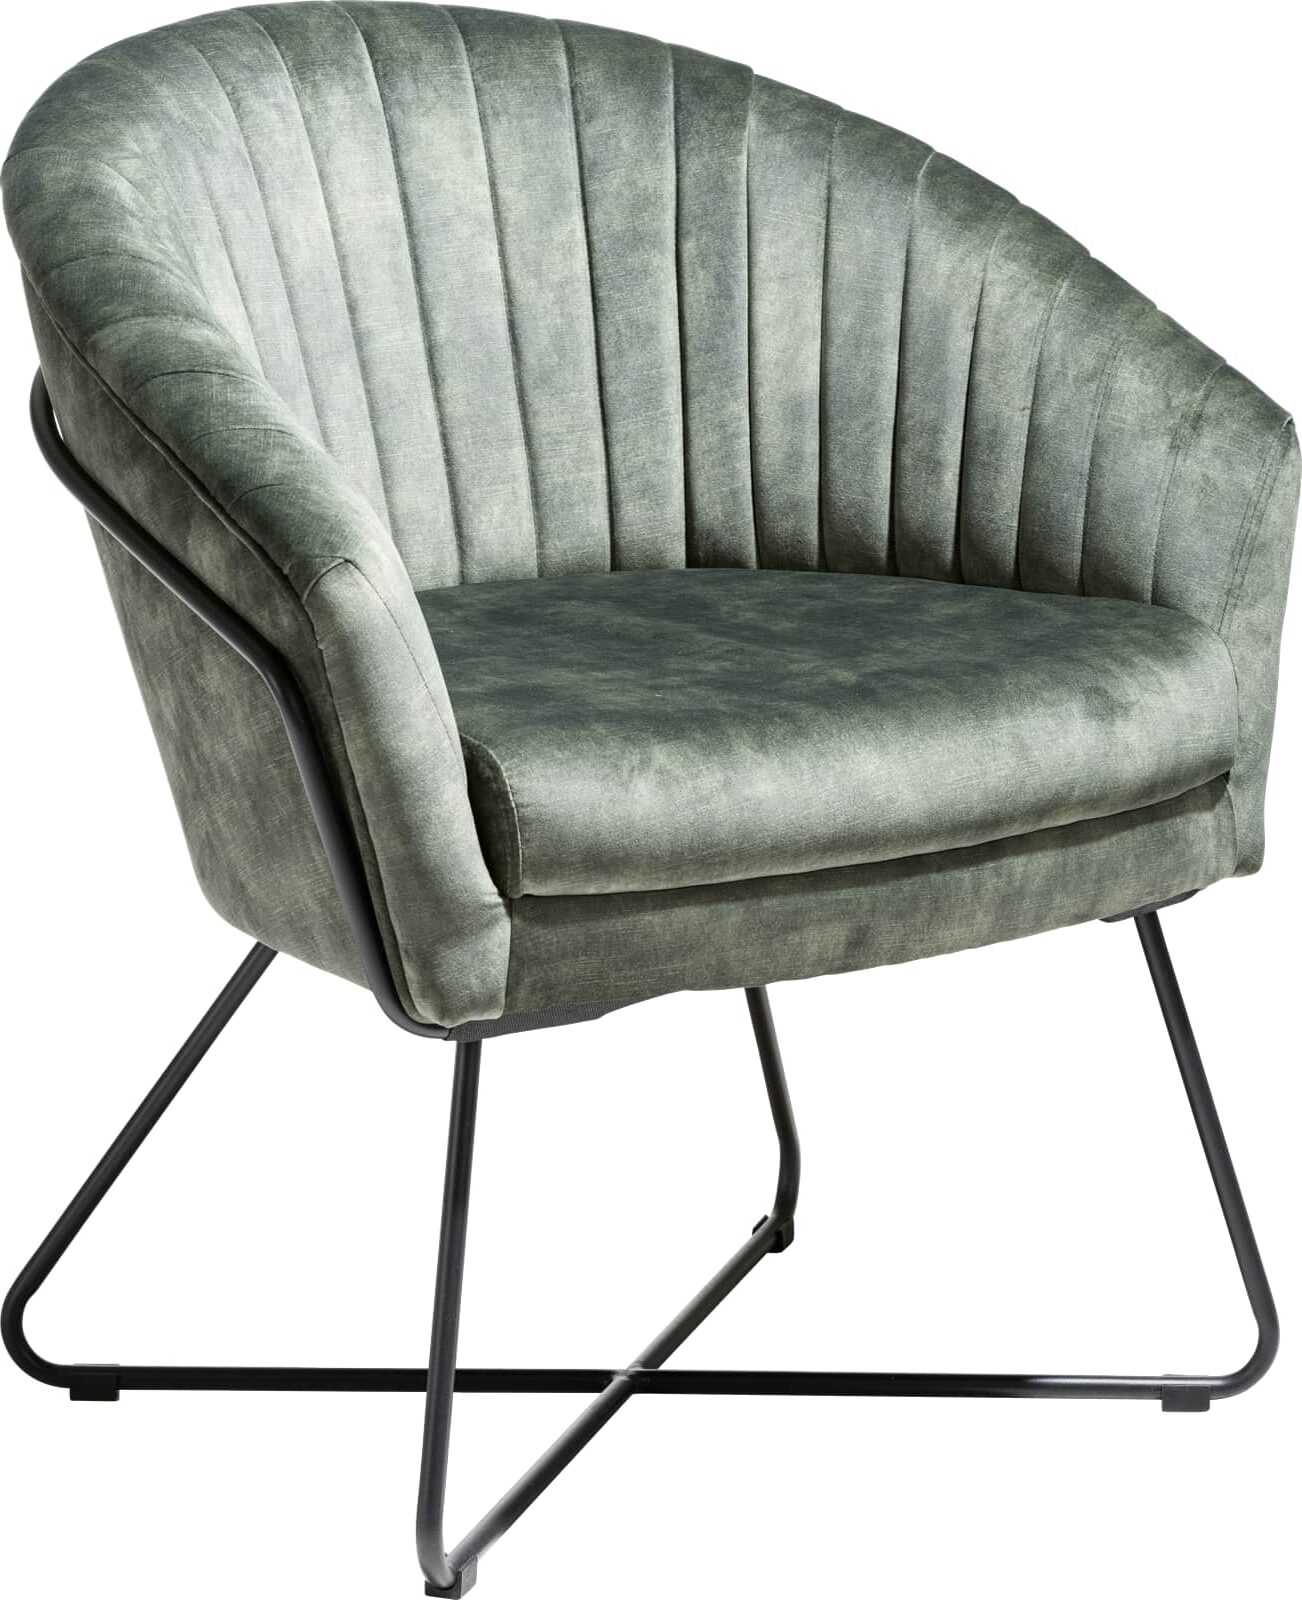 Henders & Hazel Cayenne fauteuil met metalen frame recht zwart (rob) - selected choices Armstoel